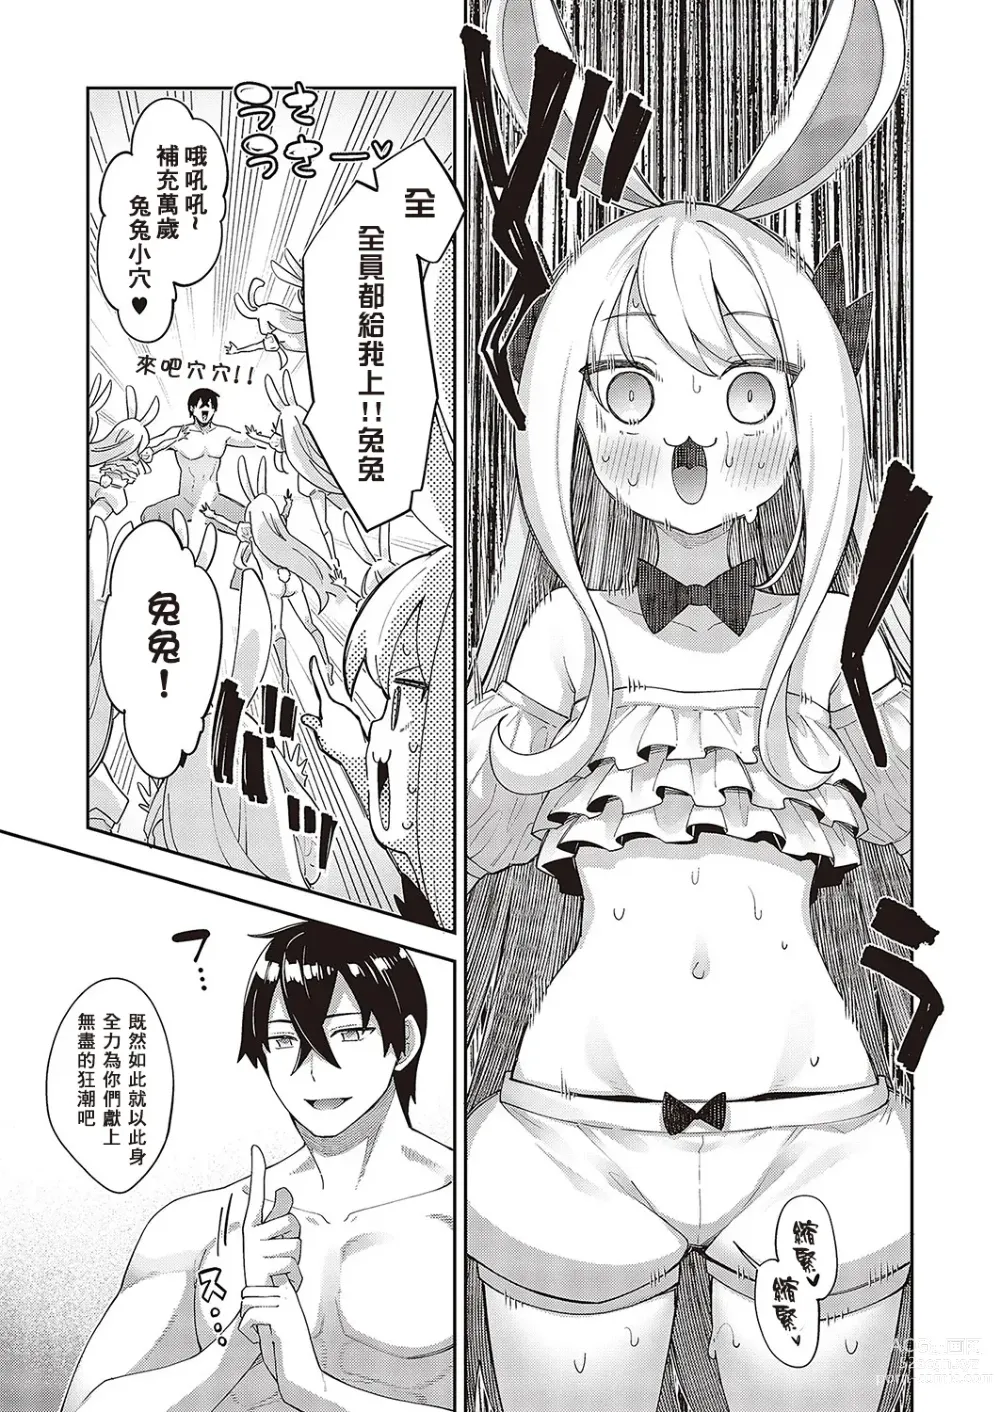 Page 10 of manga 既然來到異世界就用好色技能盡其所能的謳歌人生 第10枪